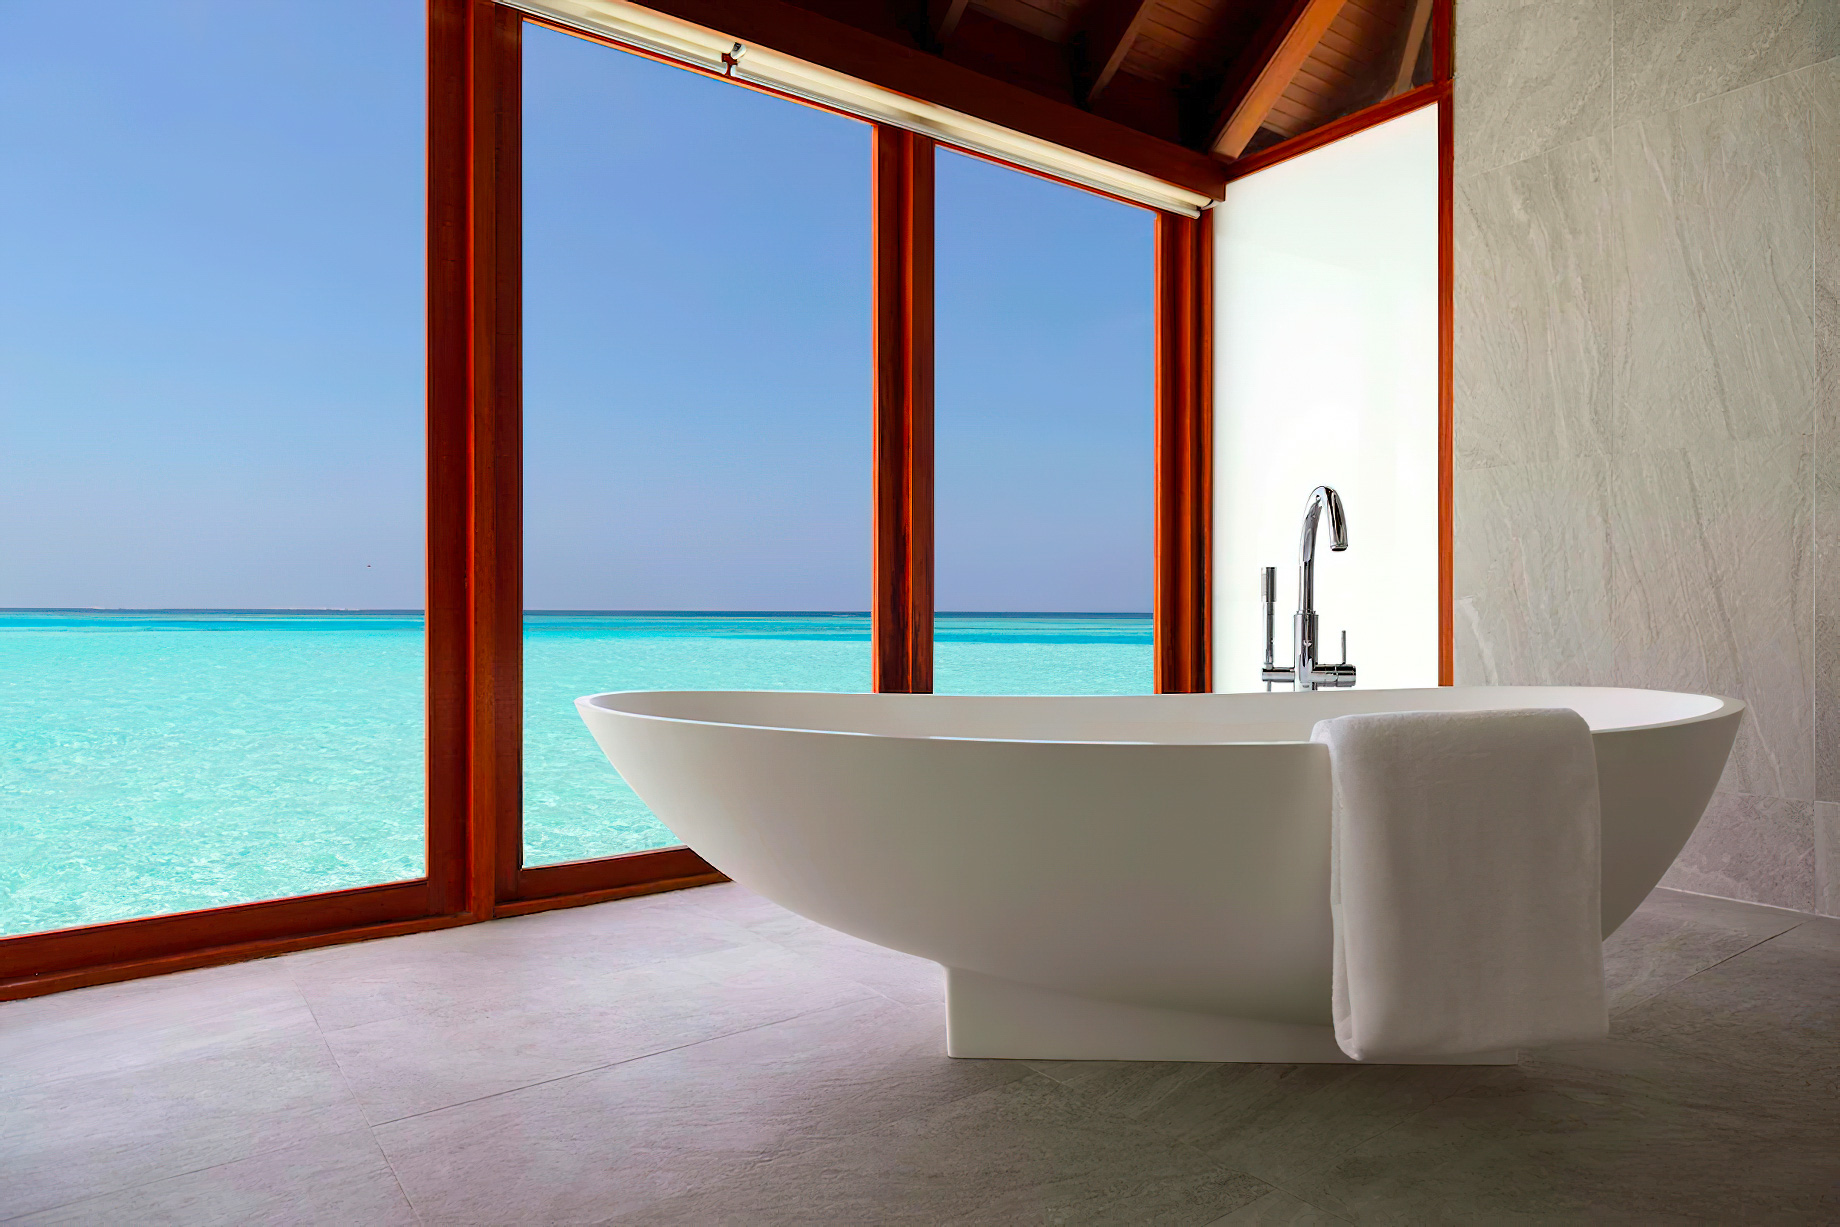 Anantara Thigu Maldives Resort – South Male Atoll, Maldives – Sunrise Over Water Suite Bathroom Tub